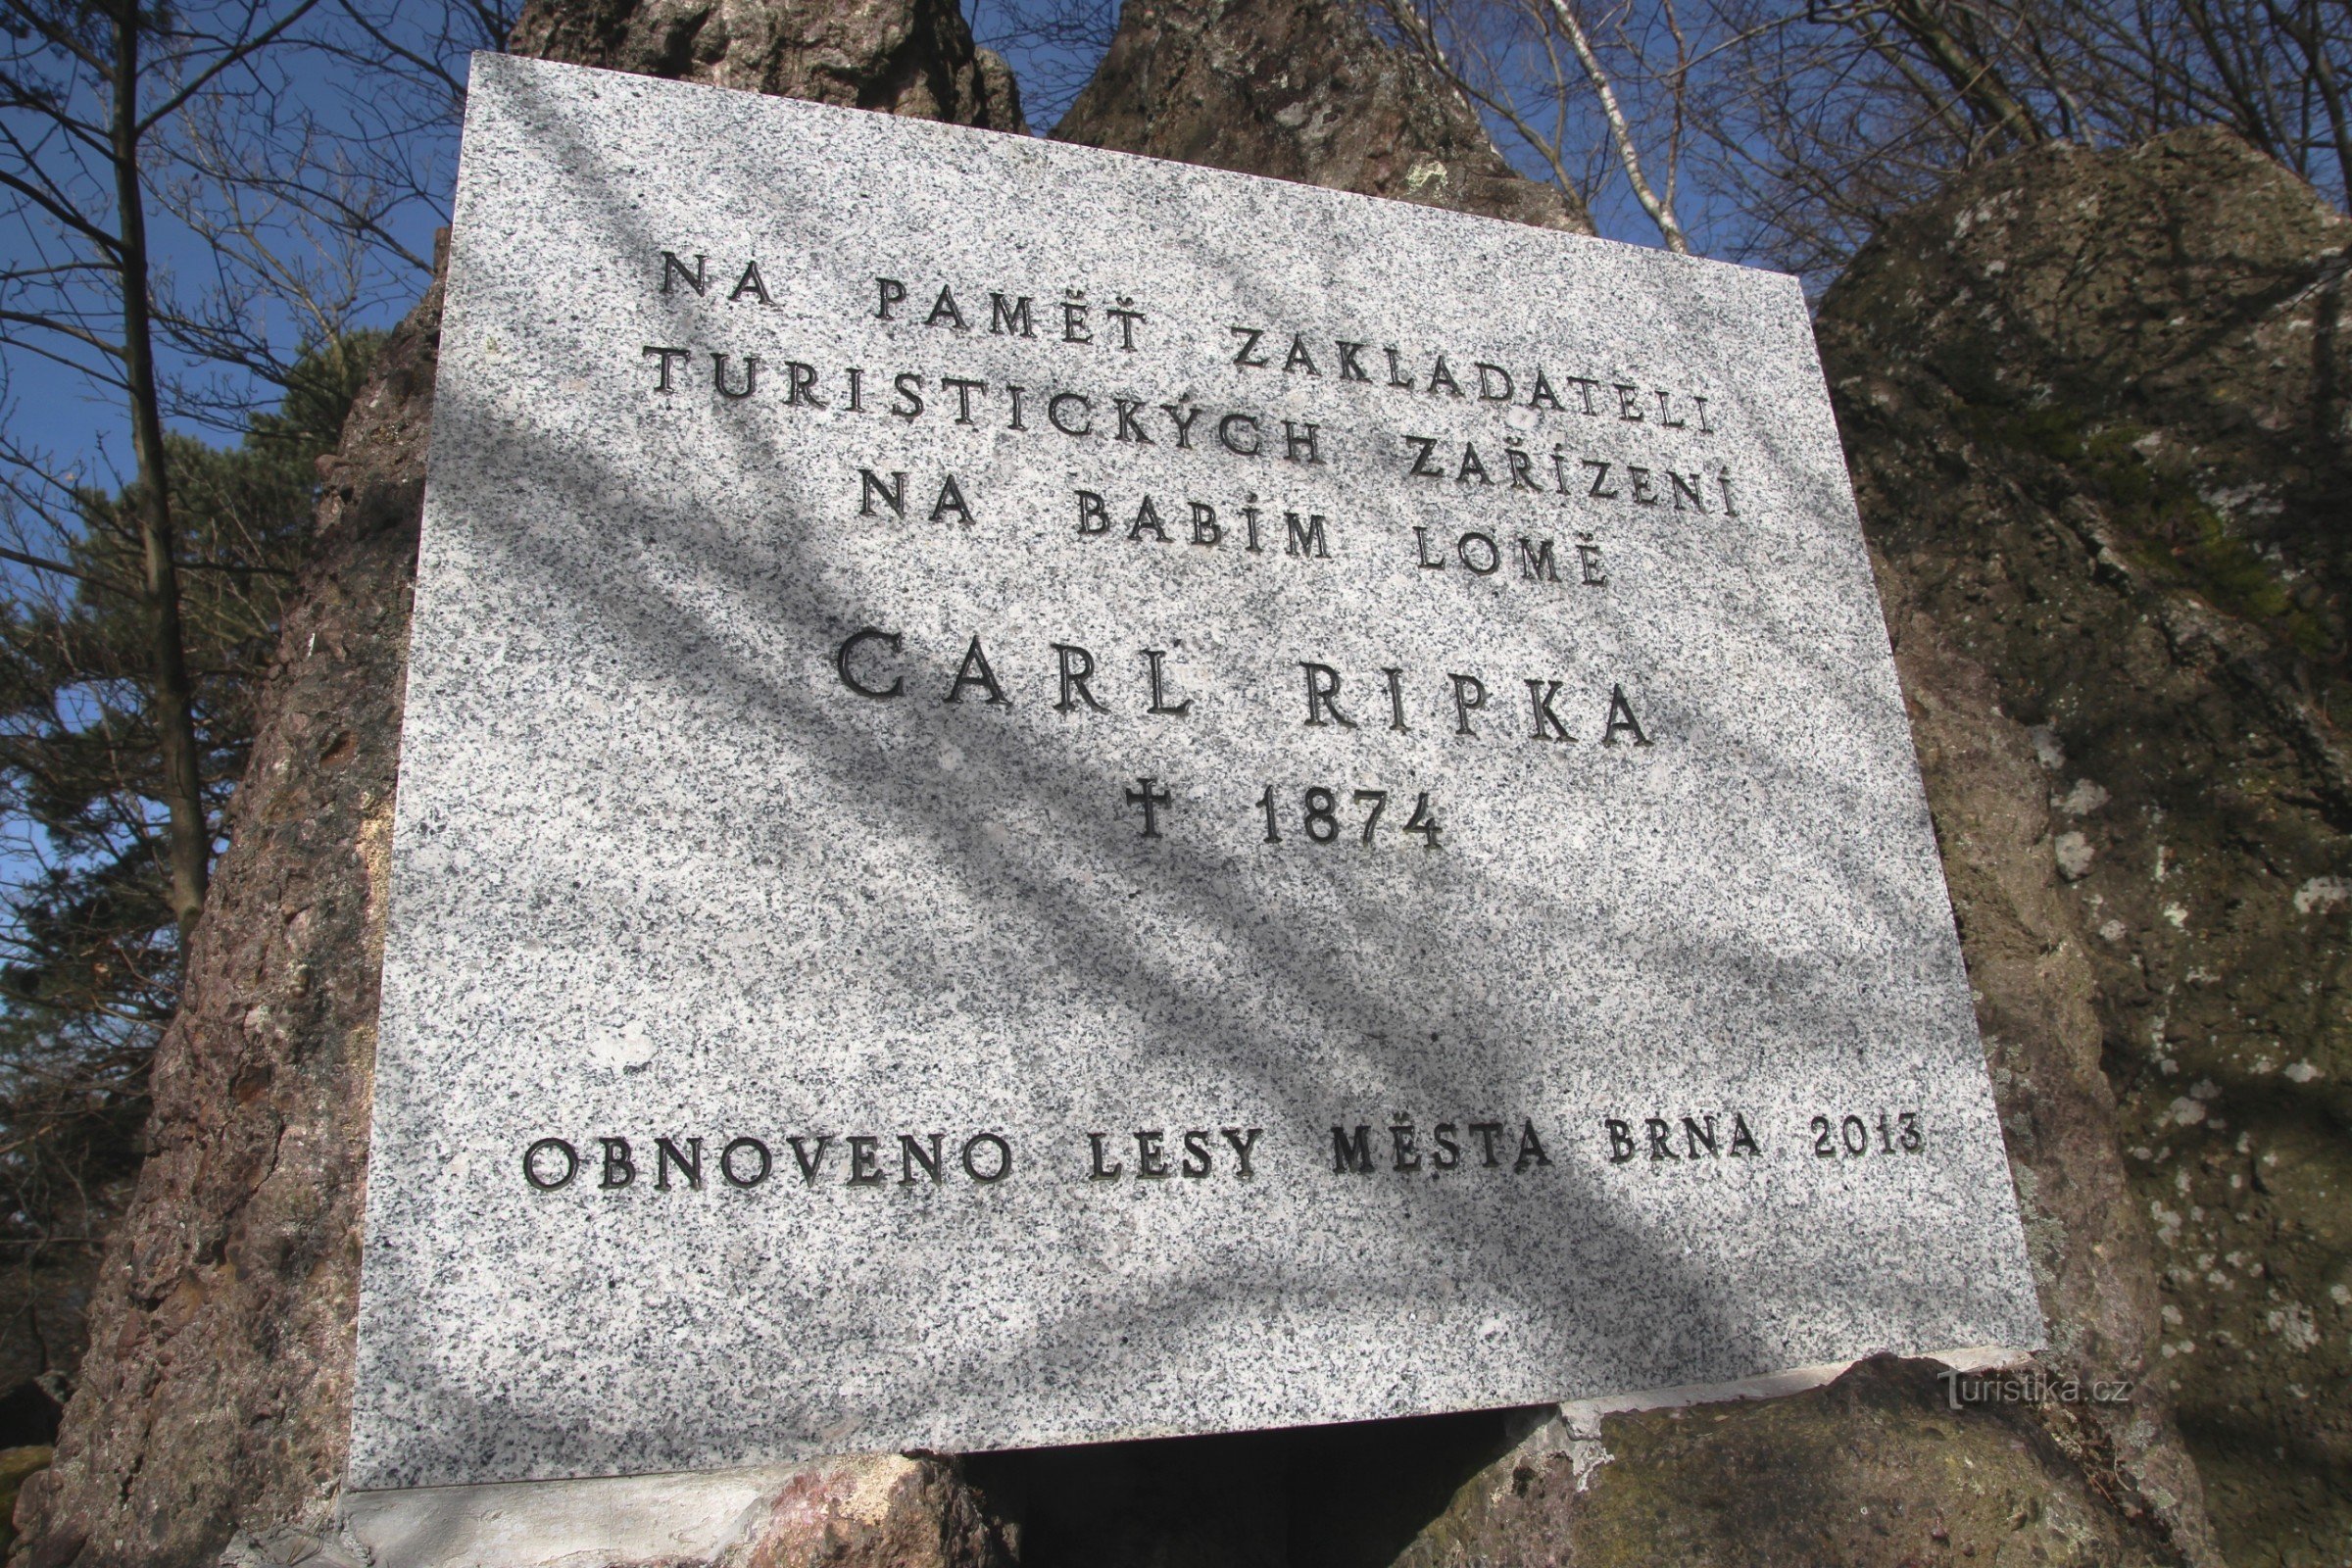 Carl Ripka Memorial Plaque